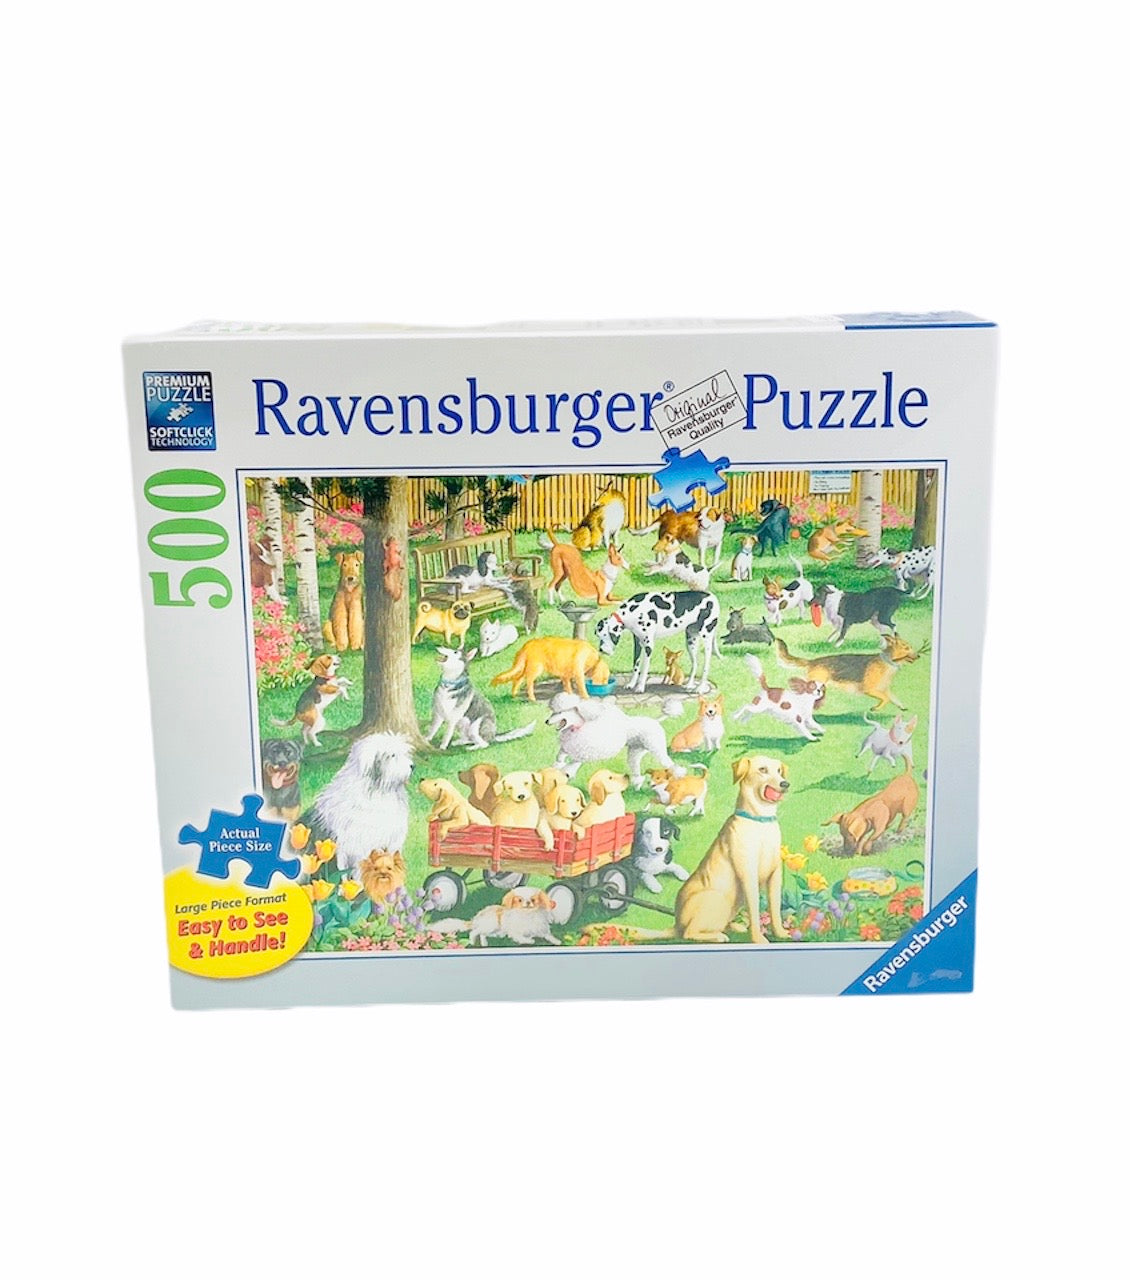 Ravensburger Puzzle - At the Dog Park large format 500 piece set